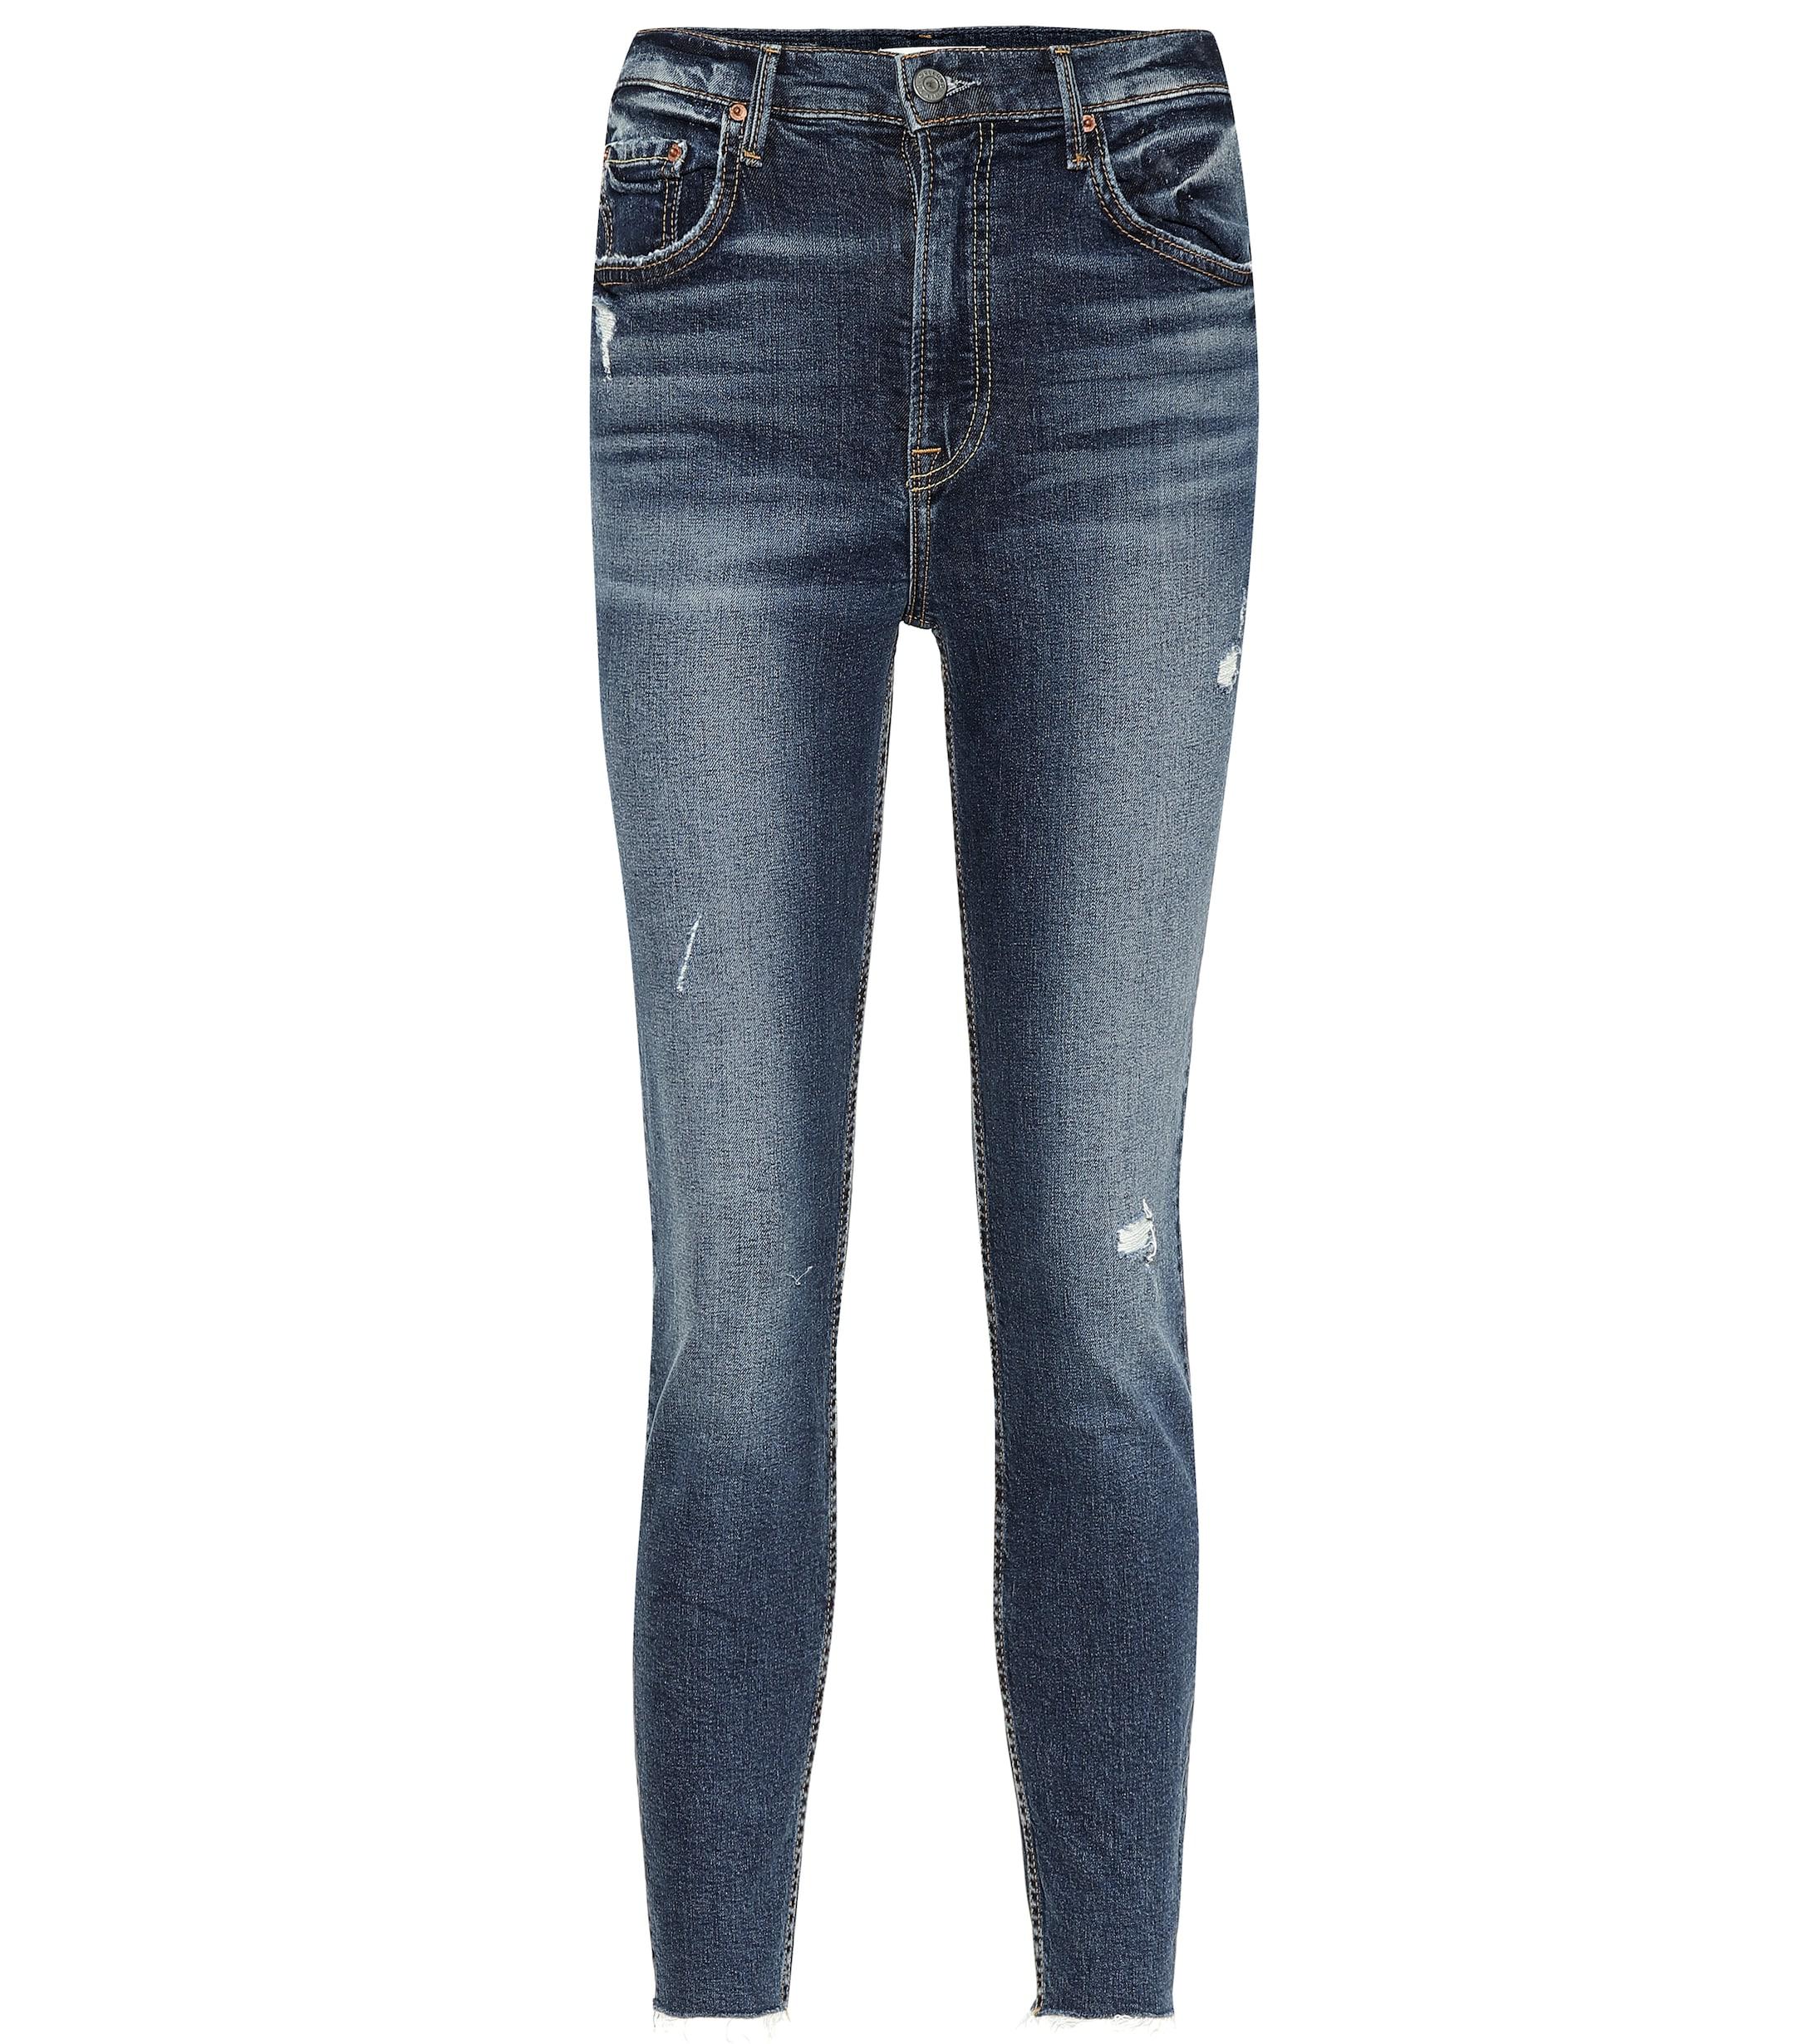 GRLFRND Denim The Kendall High-rise Skinny Jeans in Blue - Lyst